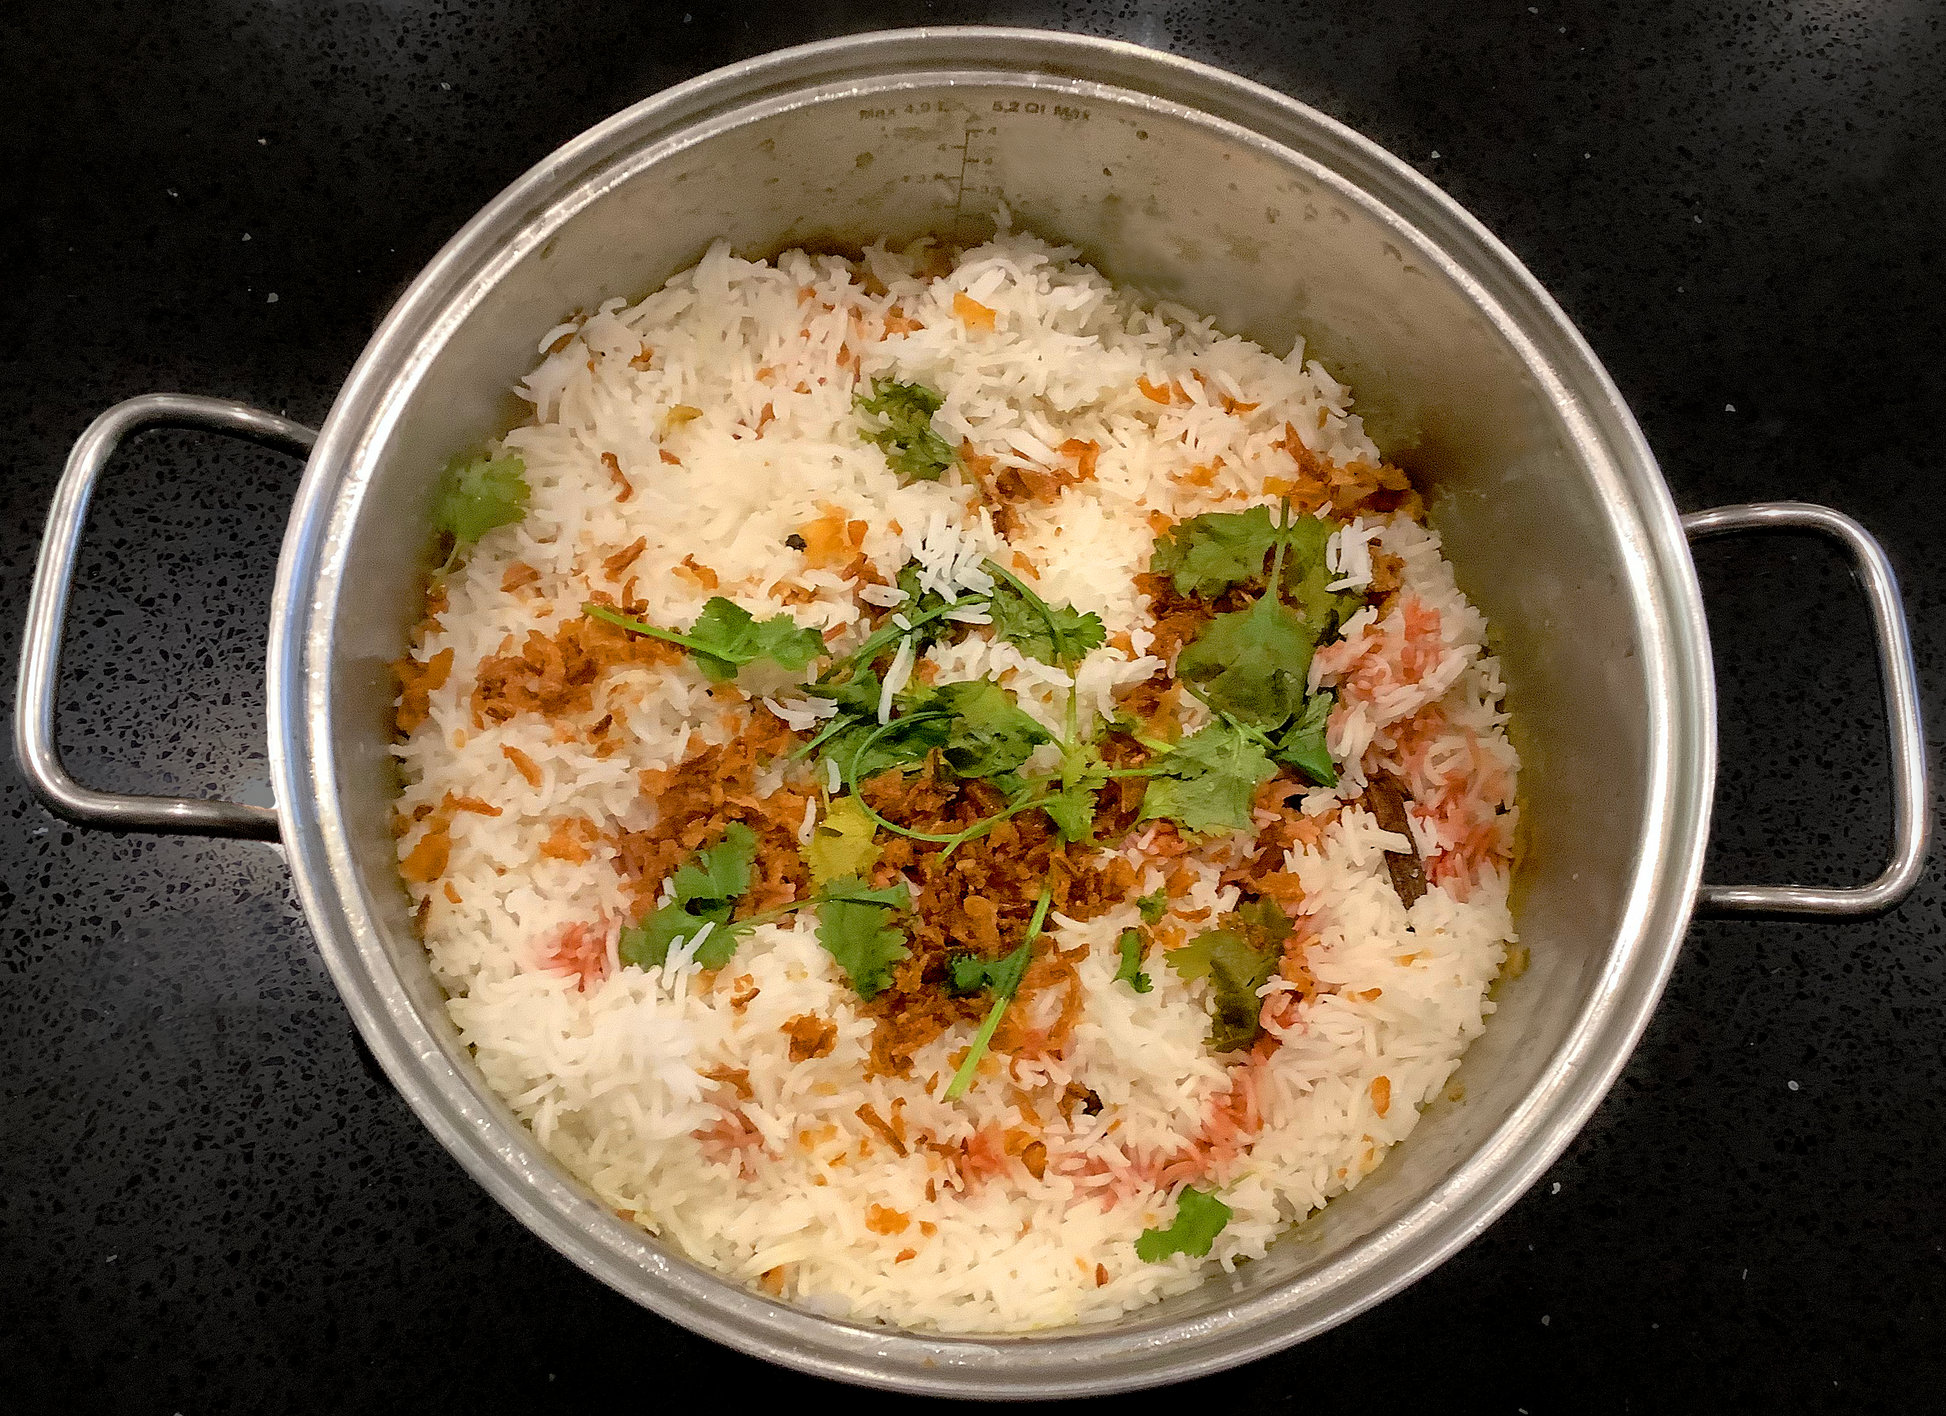 Yakhni Pilau rice in a large metallic bowl.